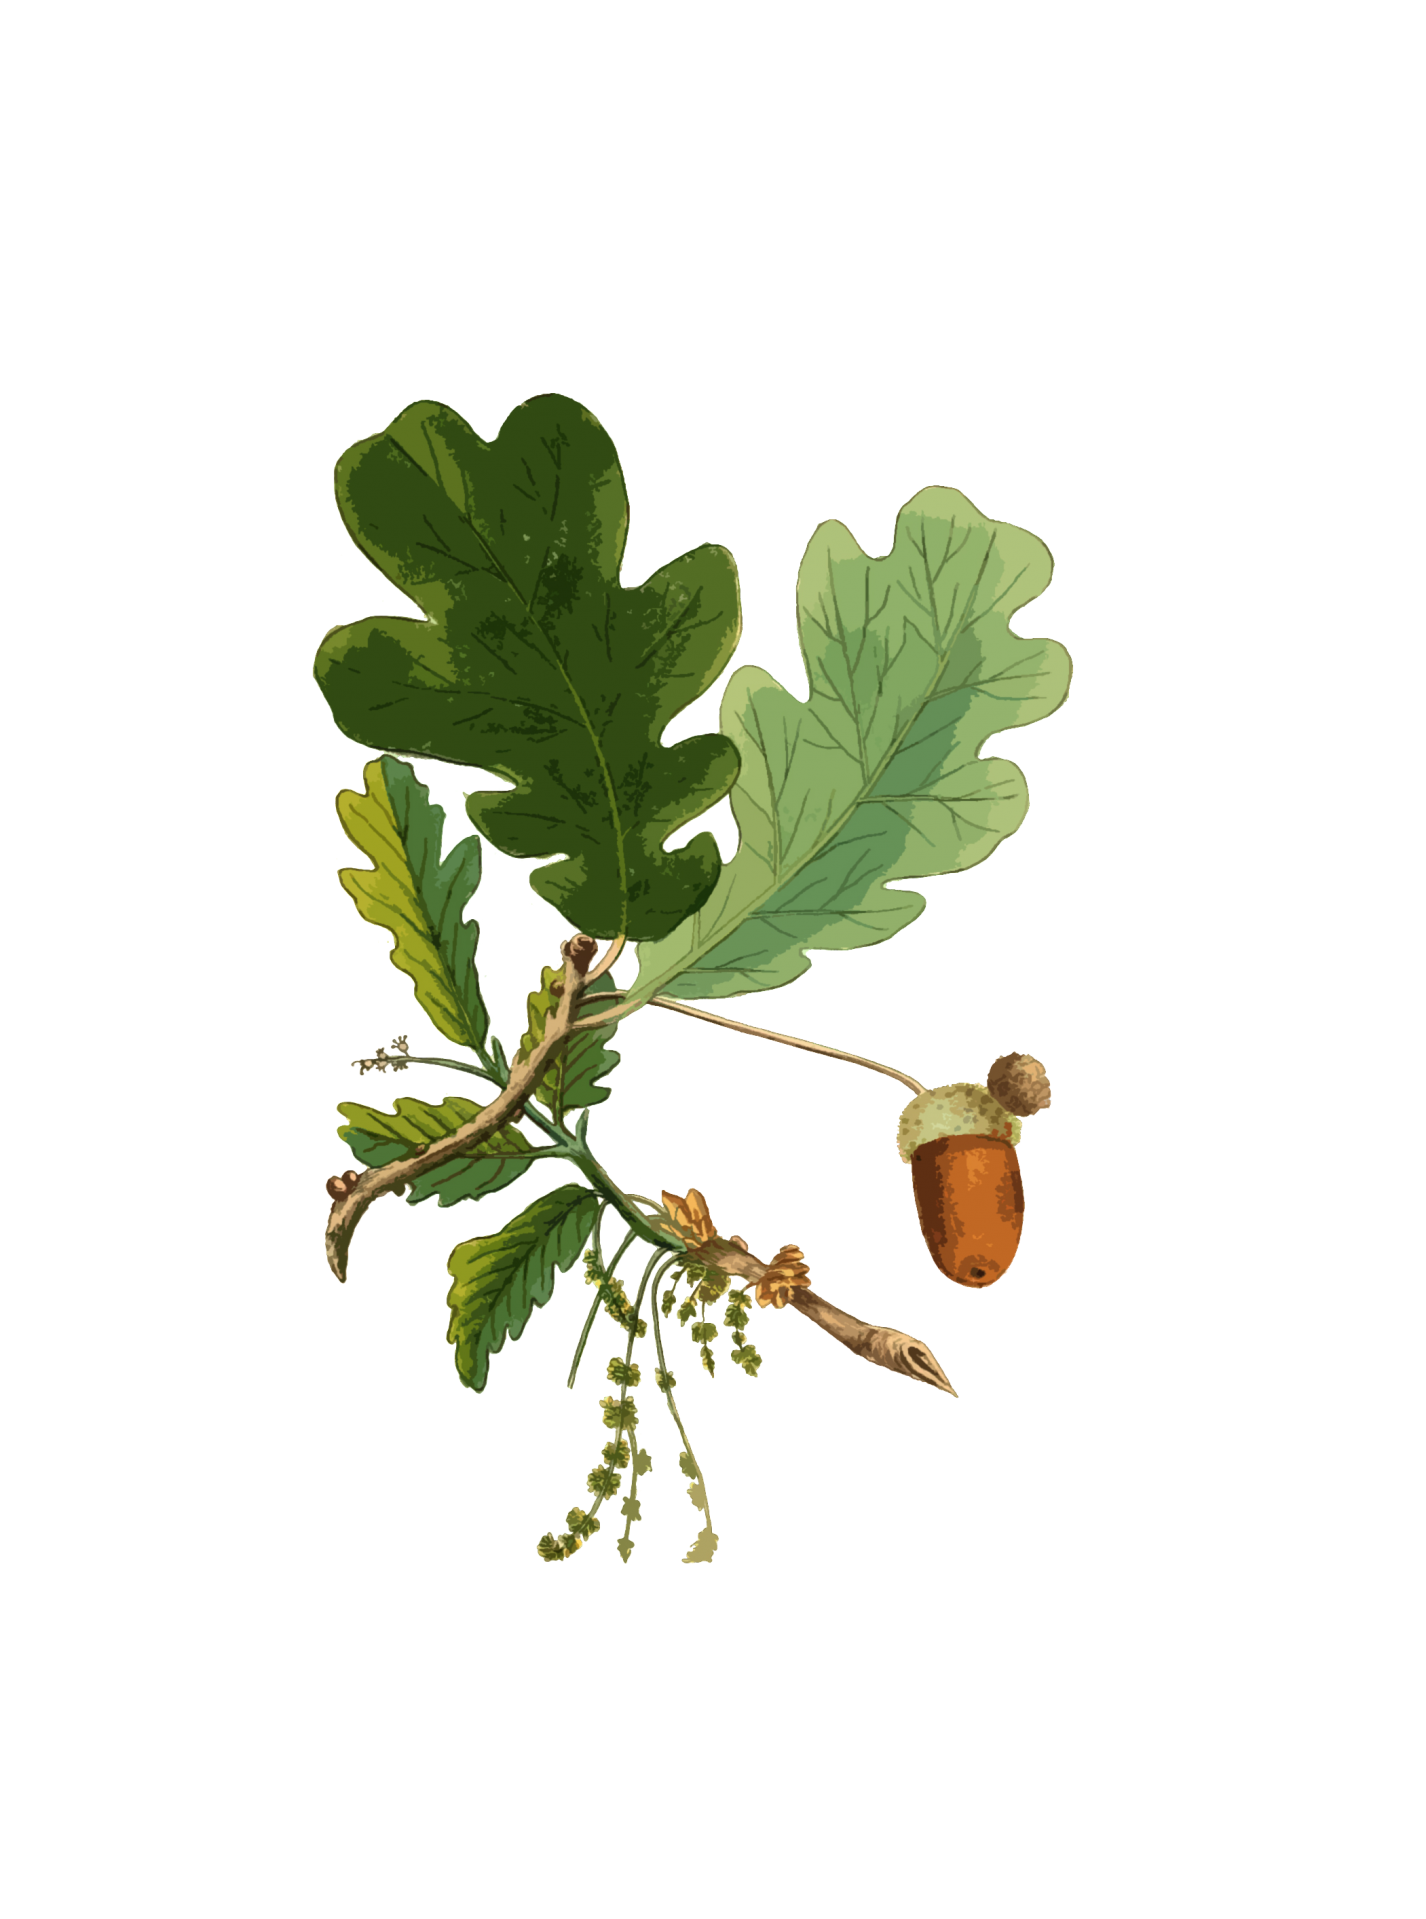 Oak Leaf And Acorn